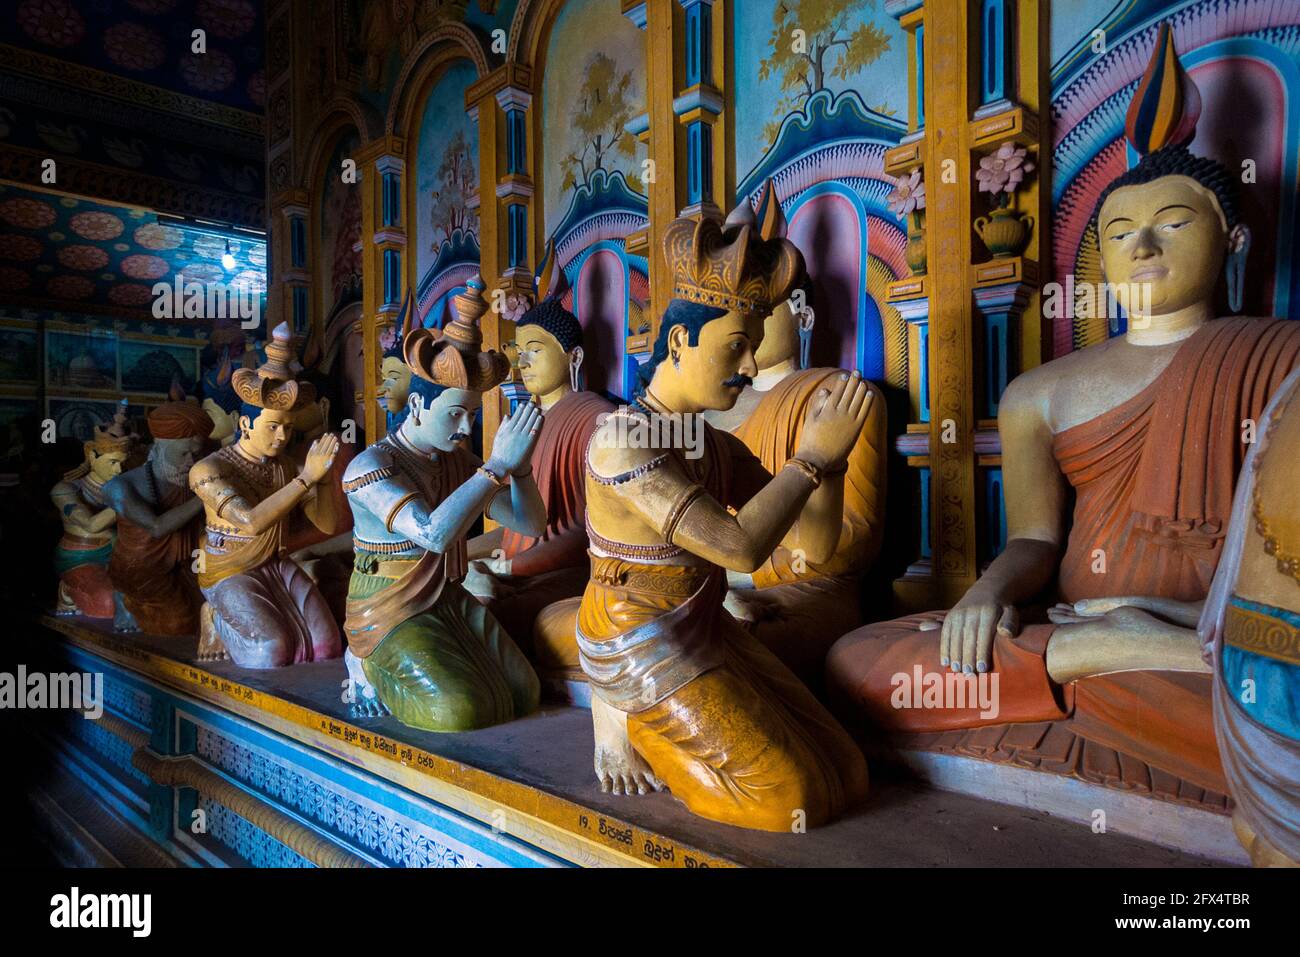 Dikwella, Wewurukannala Vihara Temple, Sri Lanka: interior room with seated Buddhas worshiped by kneeling statues Stock Photo